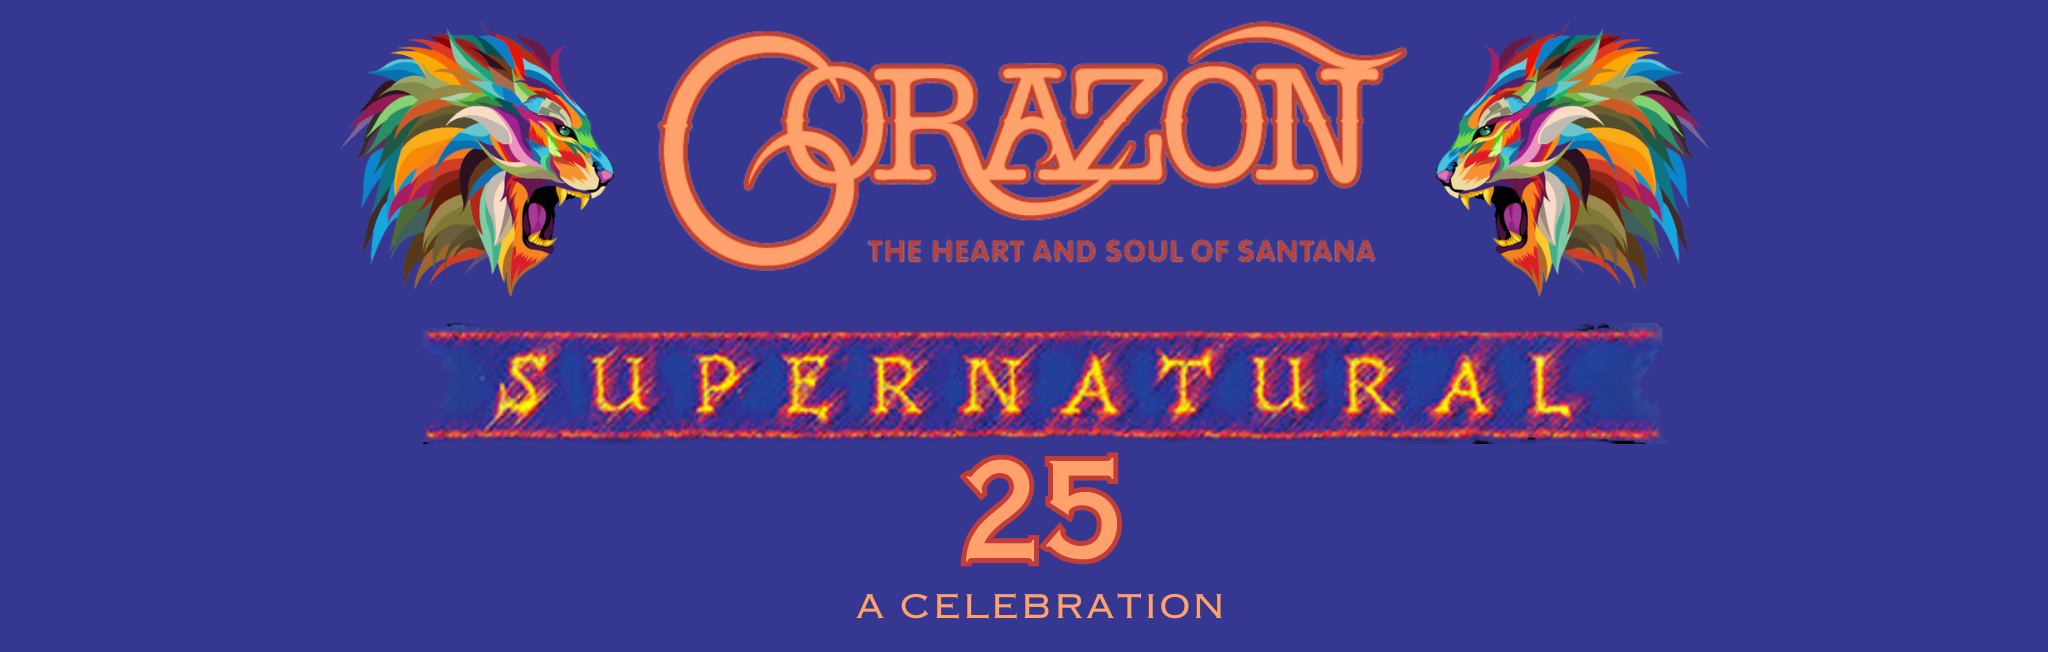 Corazon: Celebrate 25 years of Santana’s Supernatural album